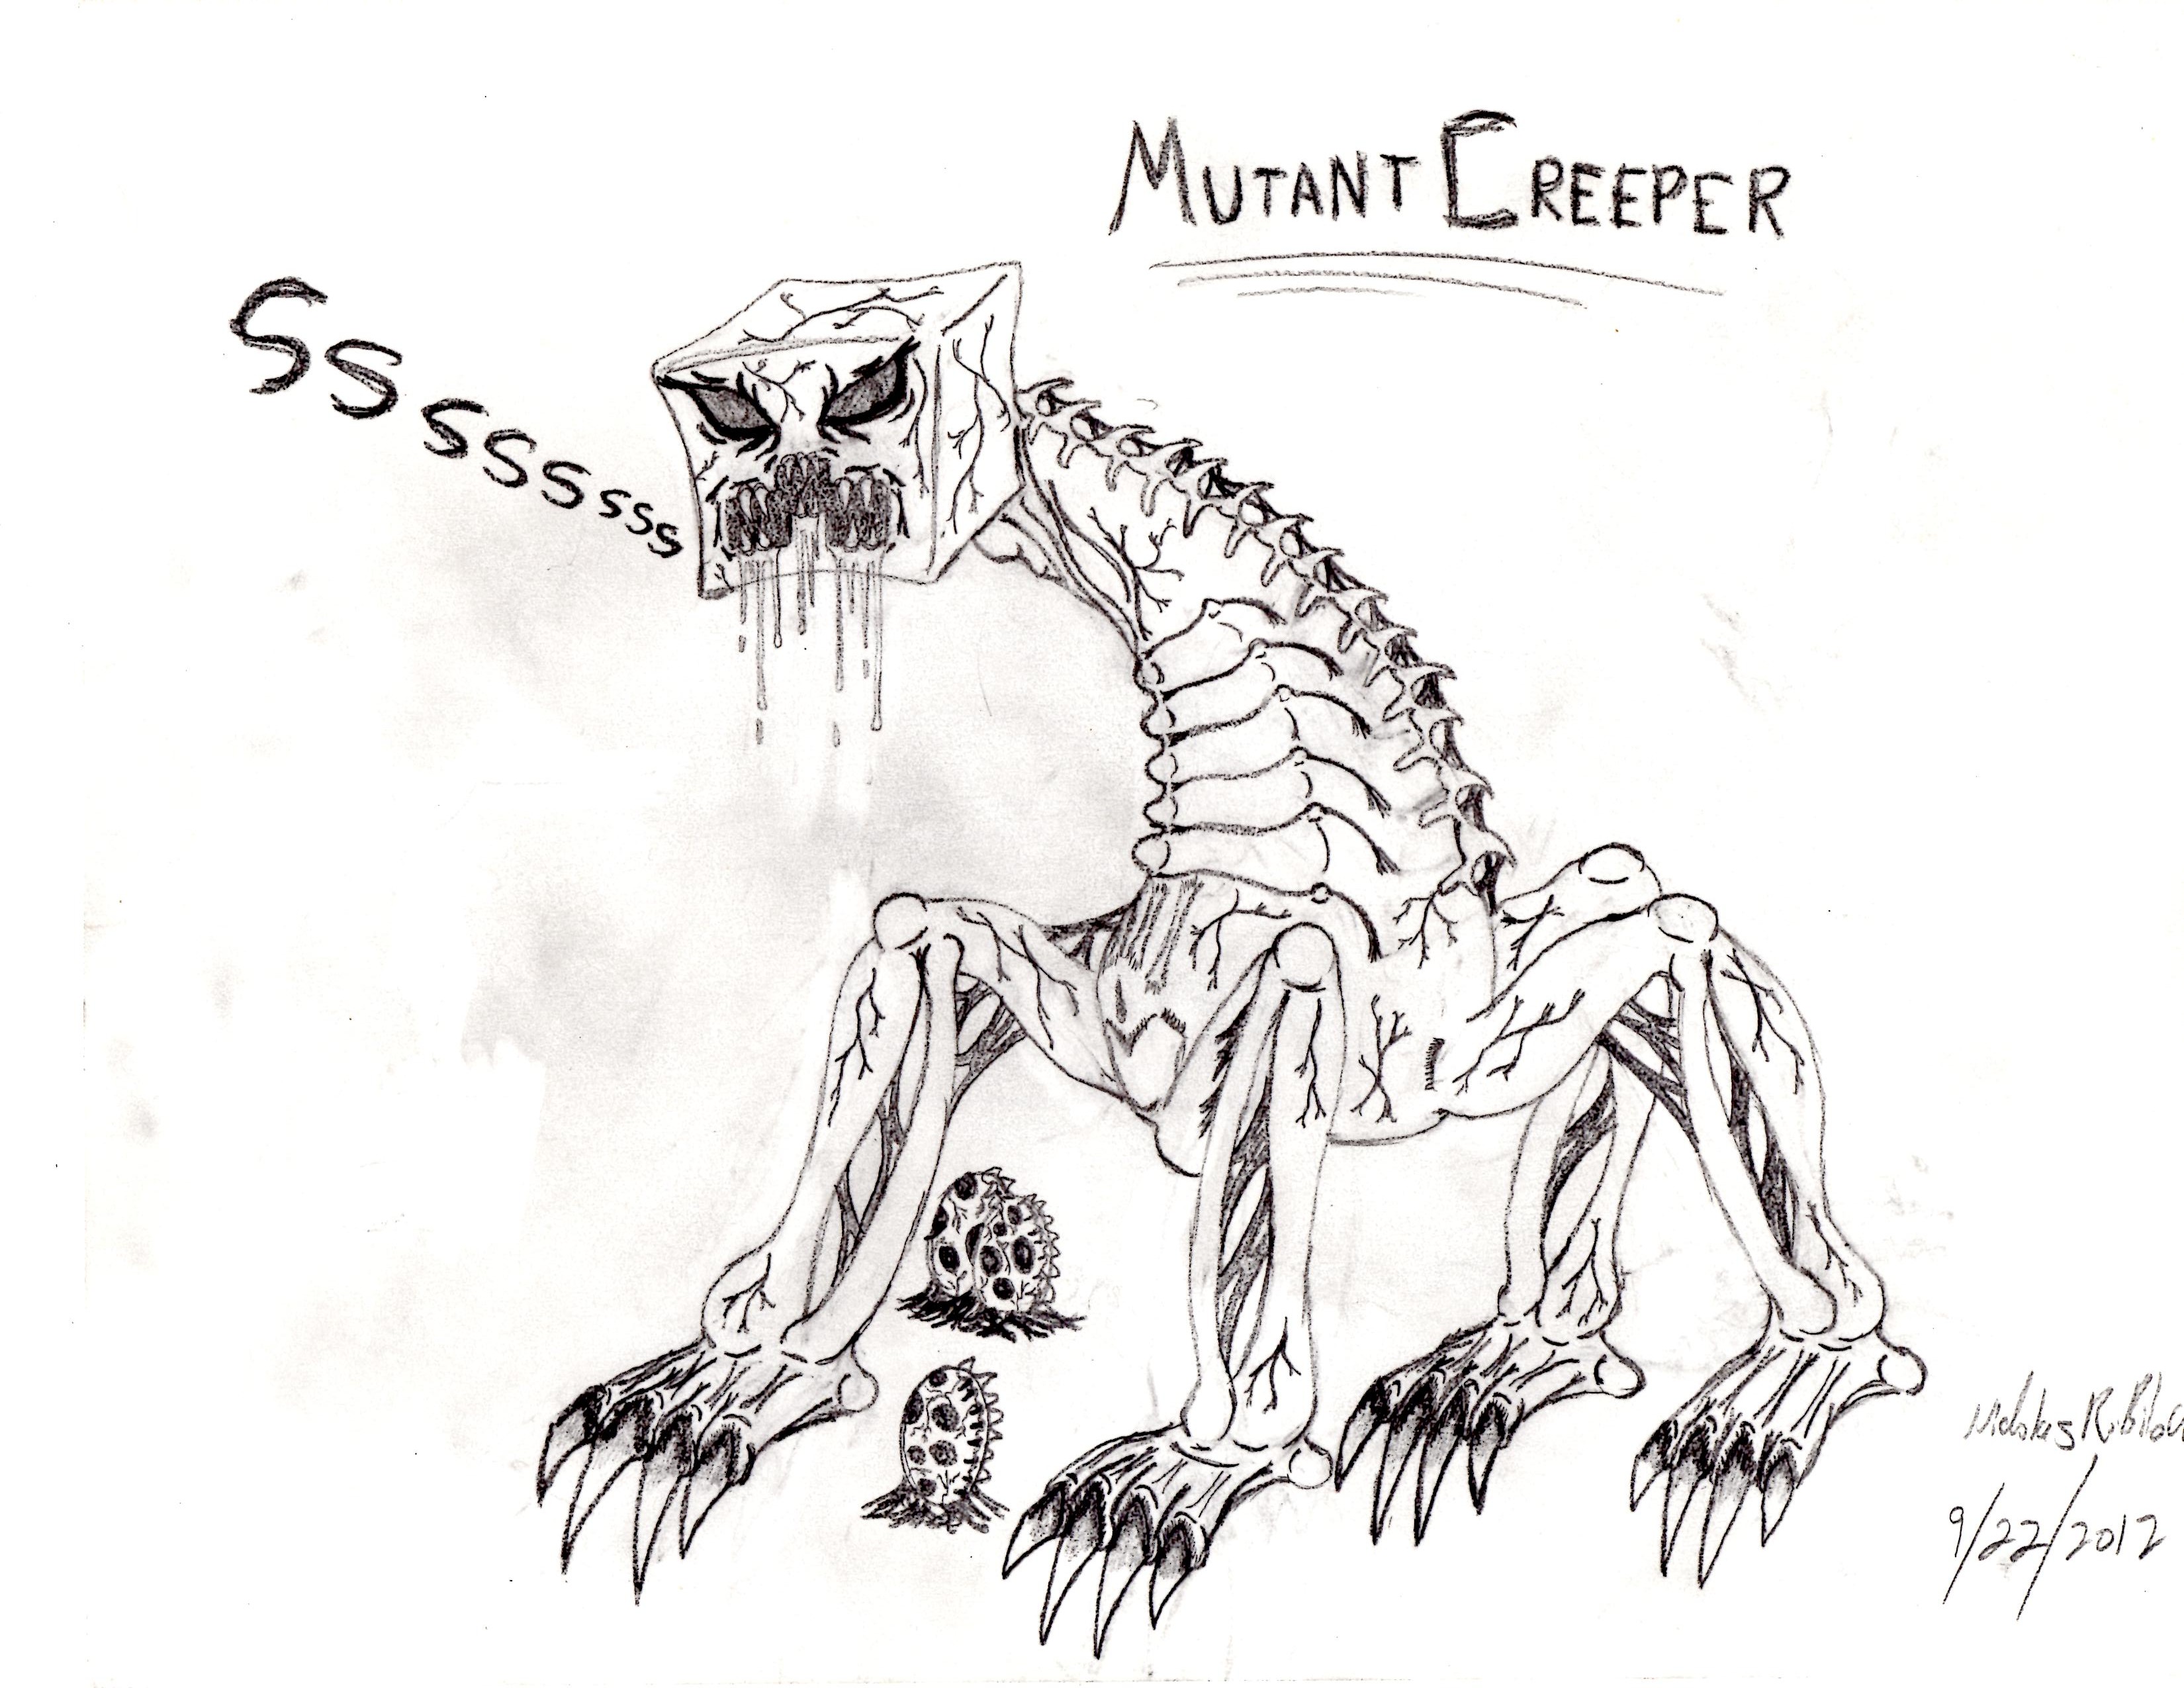 Mutant Creeper by scott910 on DeviantArt